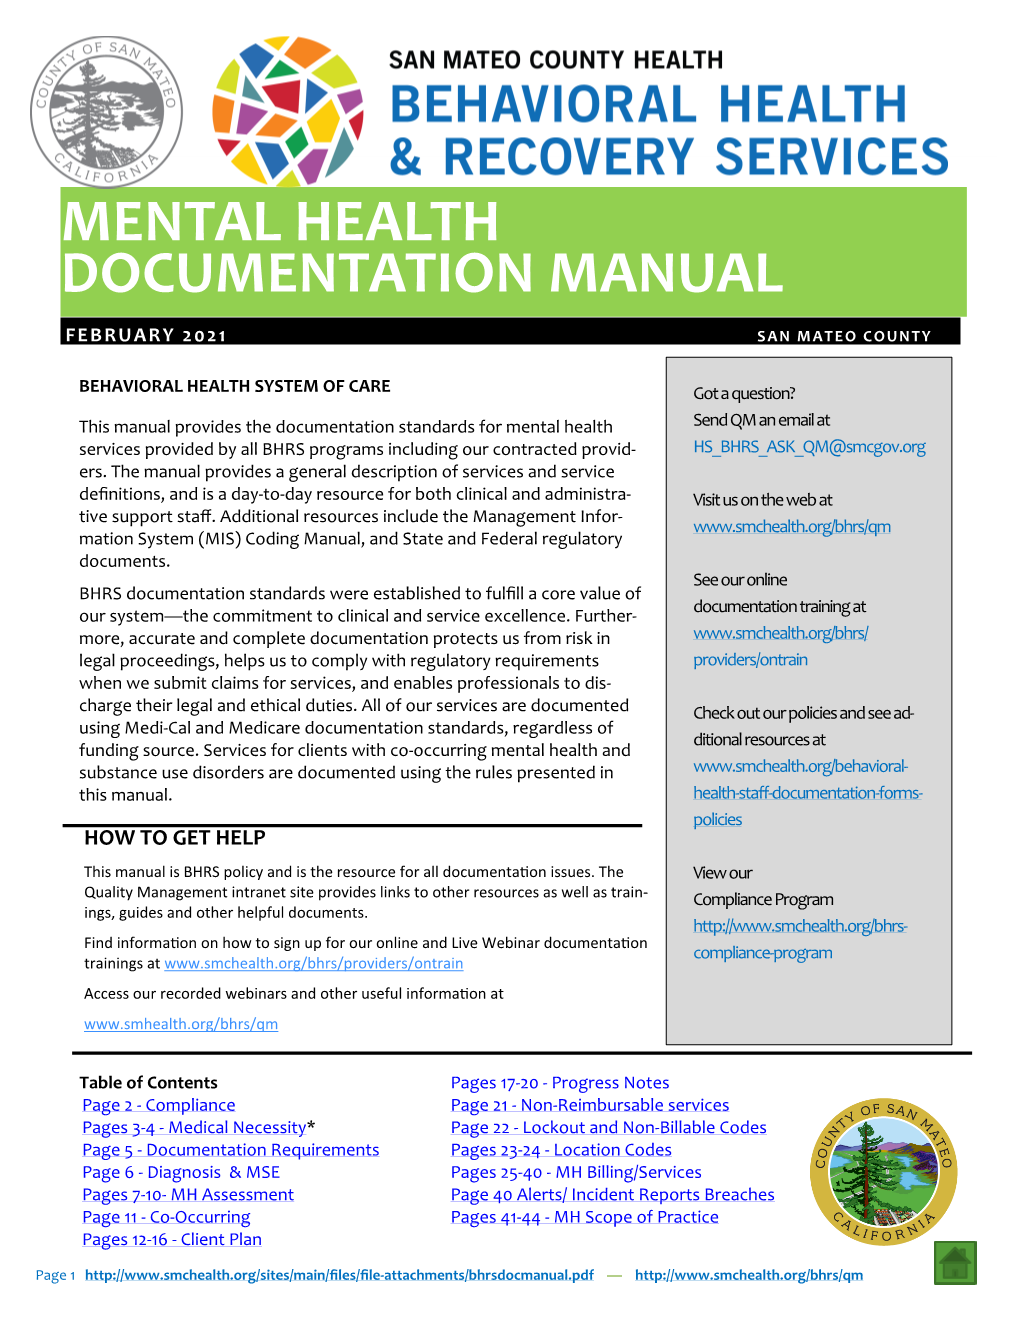 Mental Health Documentation Manual